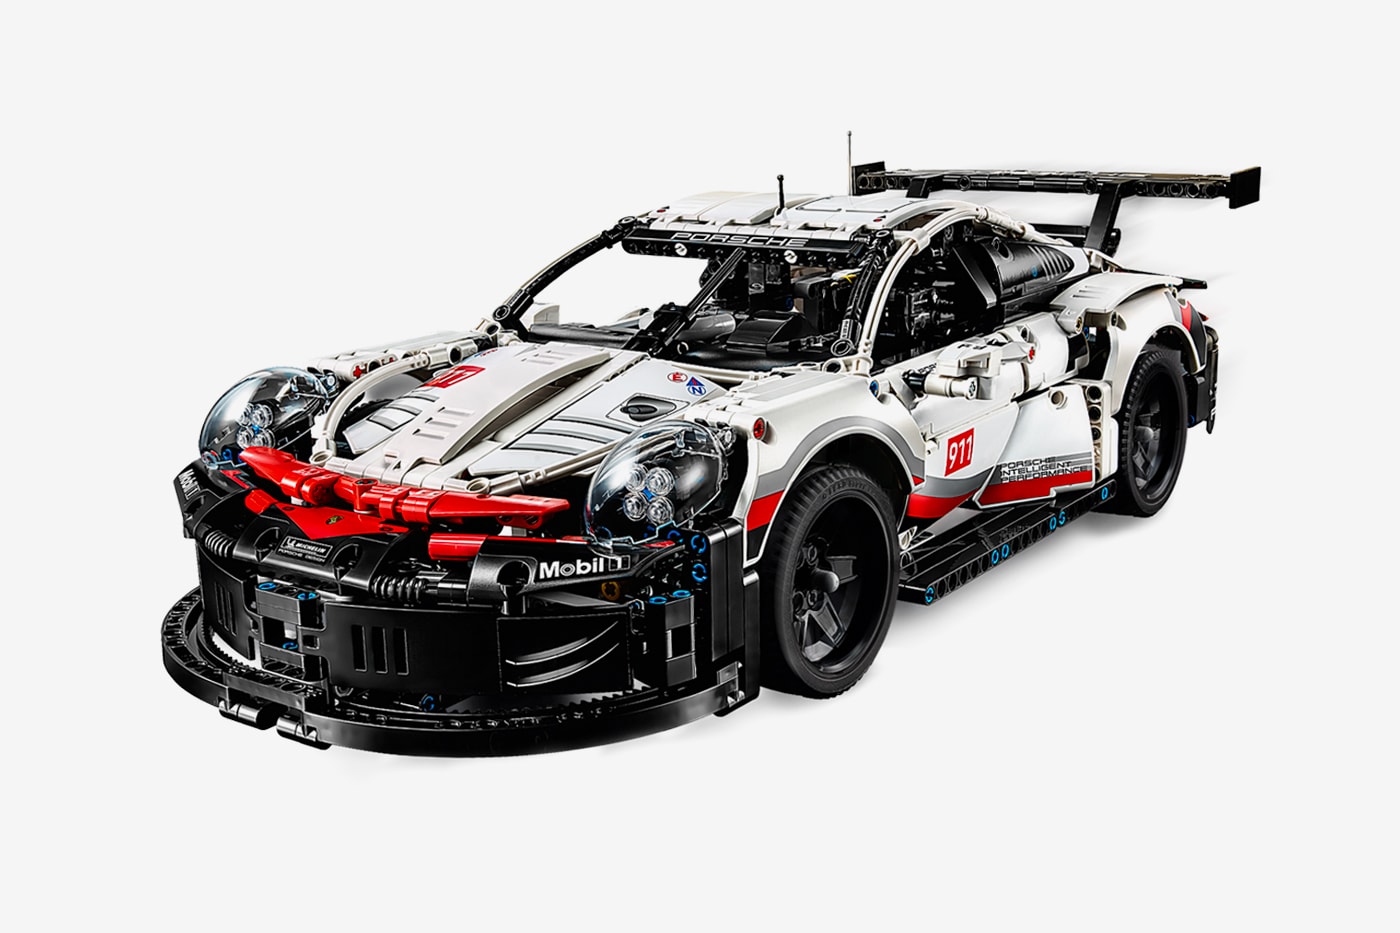 LEGO Technic 1580 Piece Porsche Design 911 RSR race car supercar vehicle model figures toys puzzle black red white 8 cylinder engine piston laguna seca